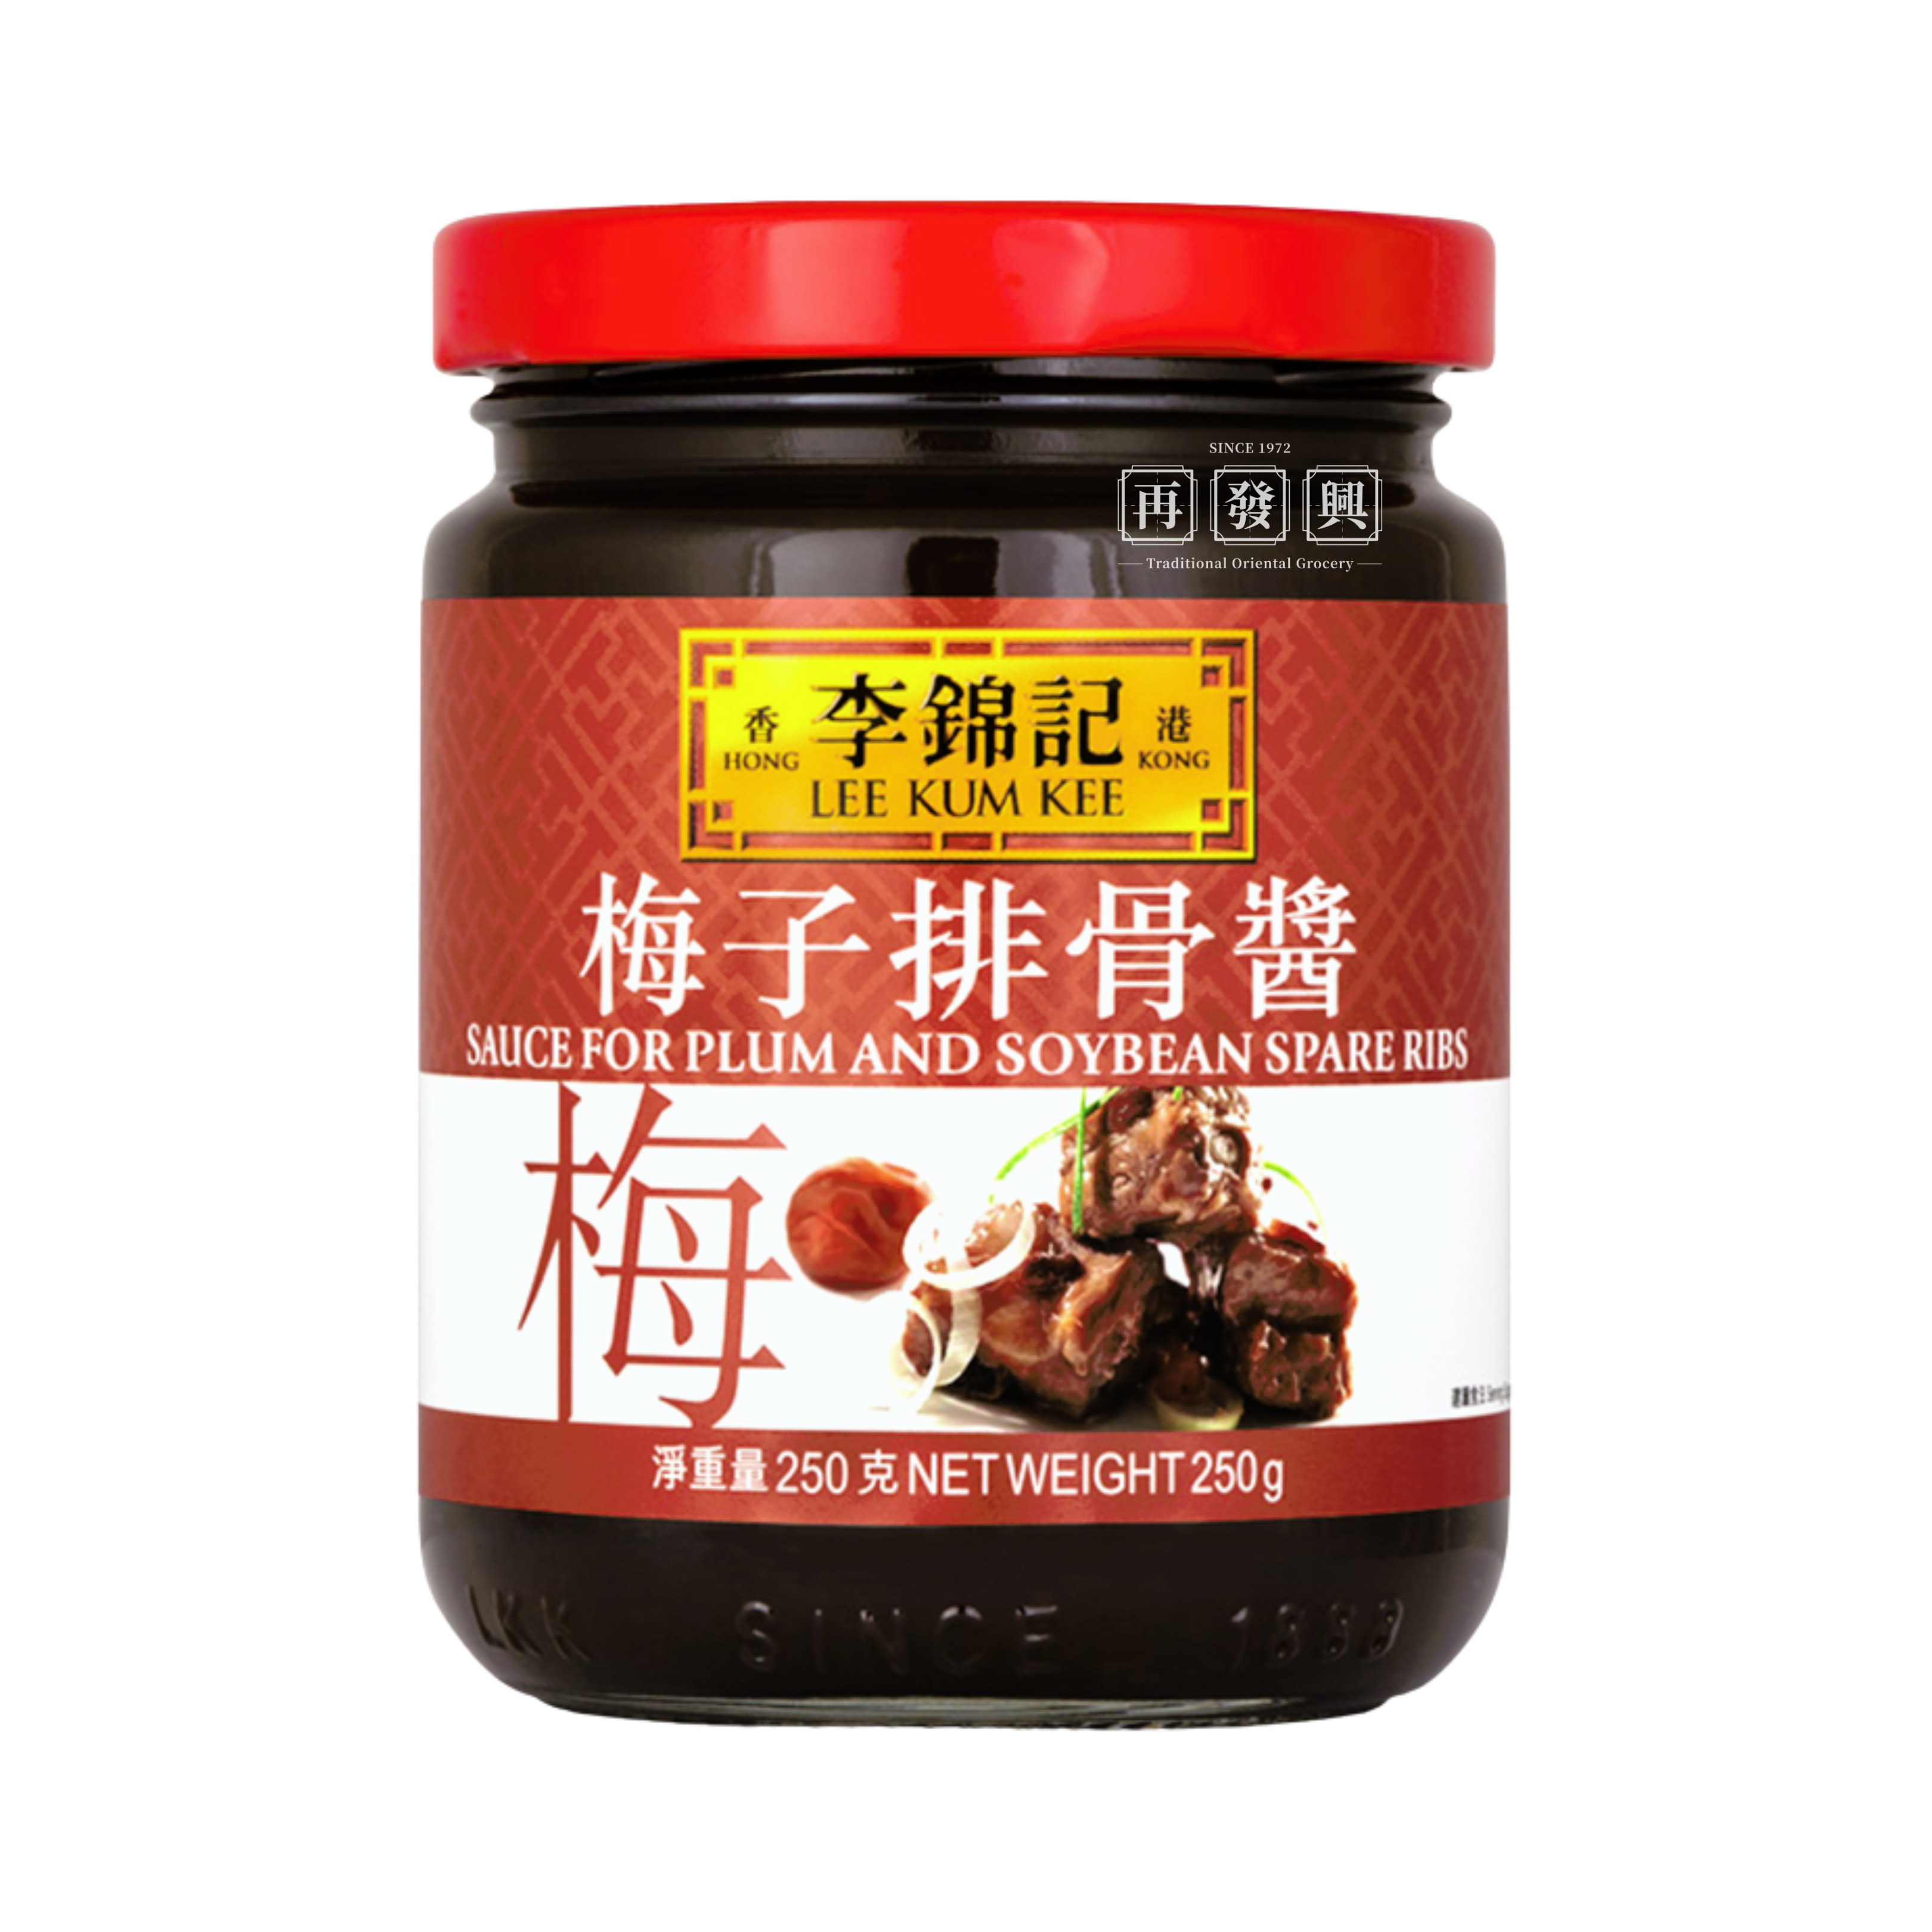 LKK HK Imported Sauce for Plum and SoyBean Spare Ribs 李锦记香港进口梅子排骨酱 250g